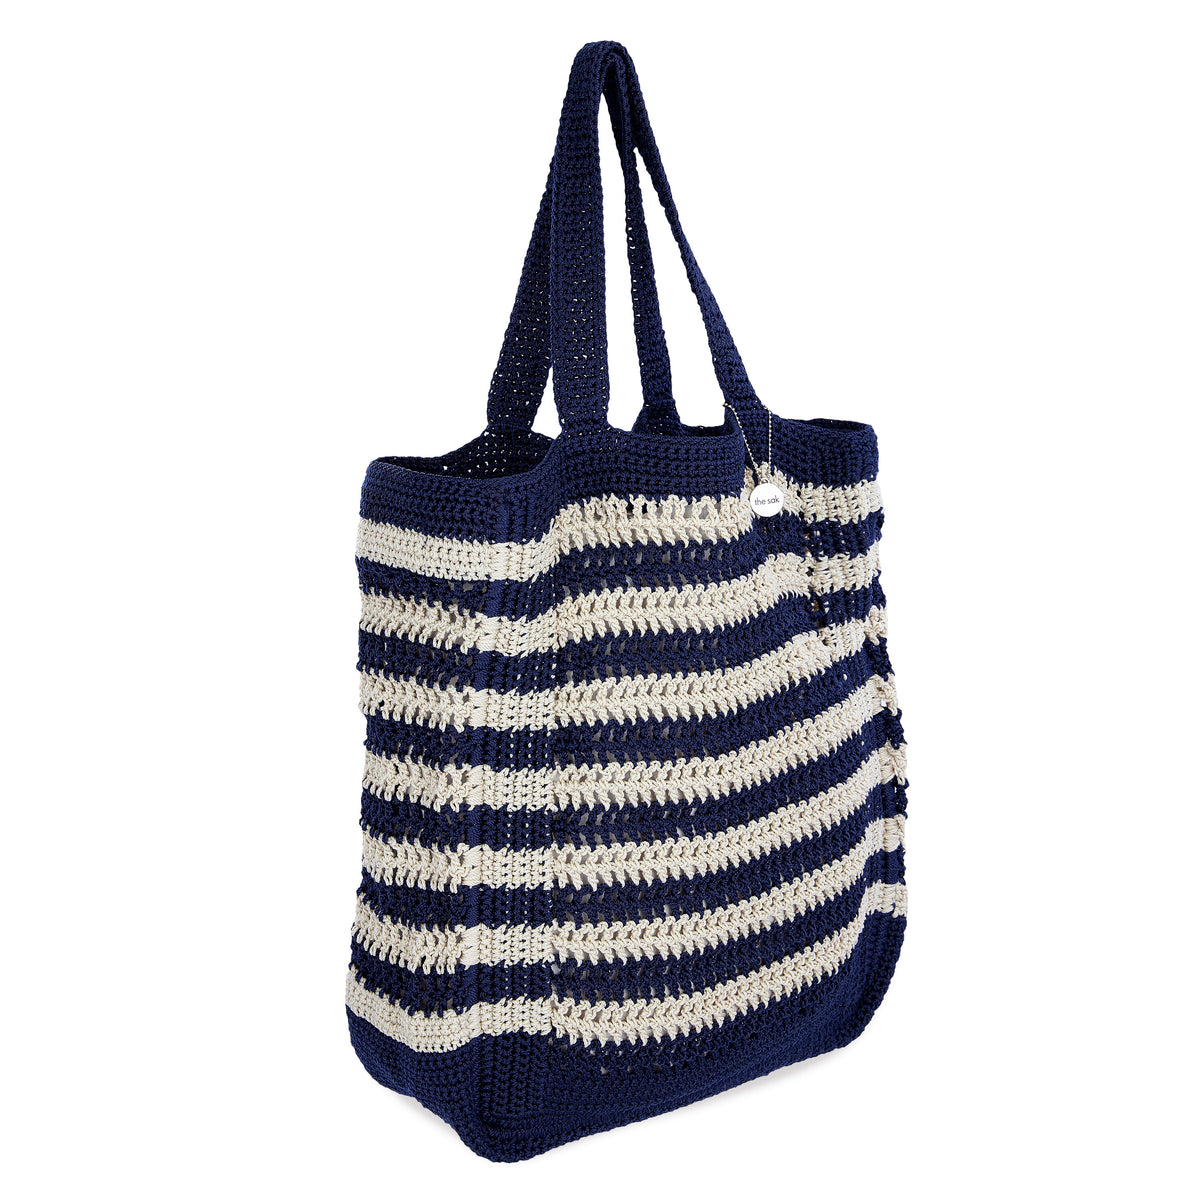 Buy wholesale Rose print hobo beach bag. Handmade large fabric hobo handbag.